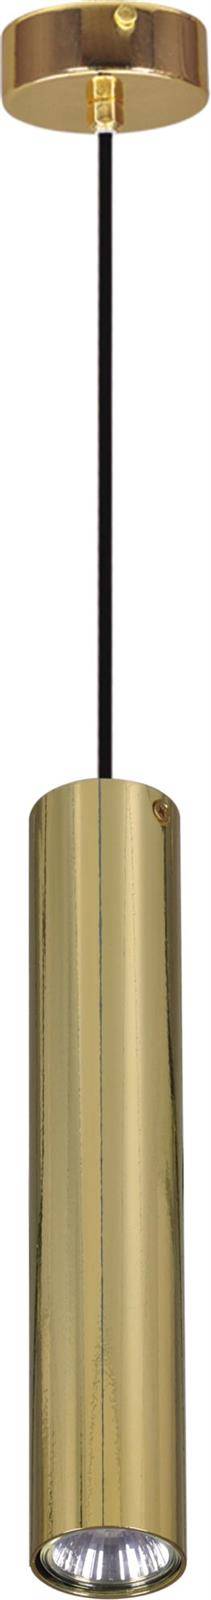 Lampa wiszca K-4825 z serii CORK